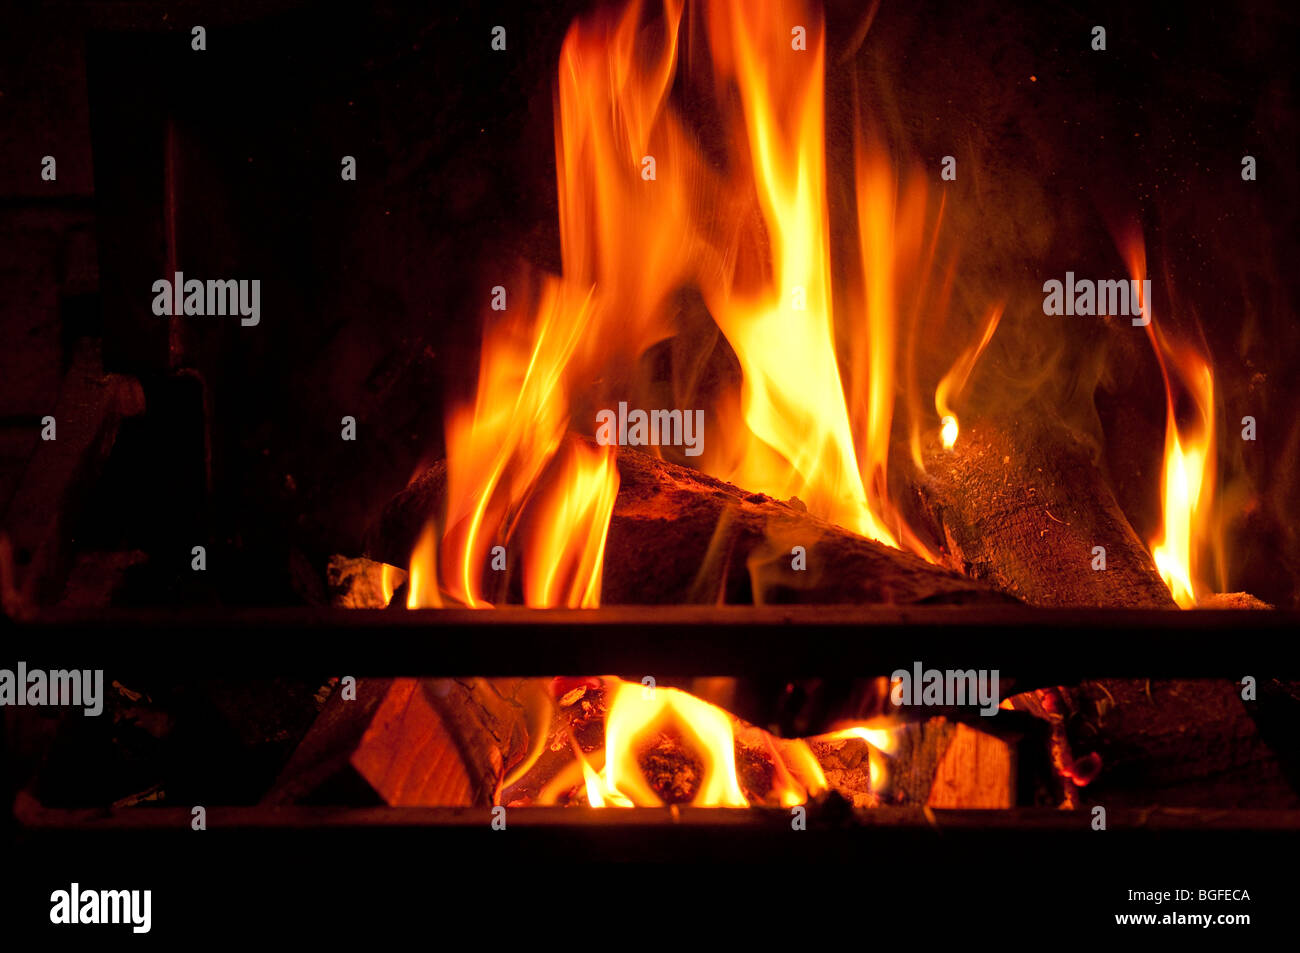 Ein Protokoll und Kohle Feuer heftig brennen - Brennen Kohlenstoff / fossile Brennstoffe. Stockfoto